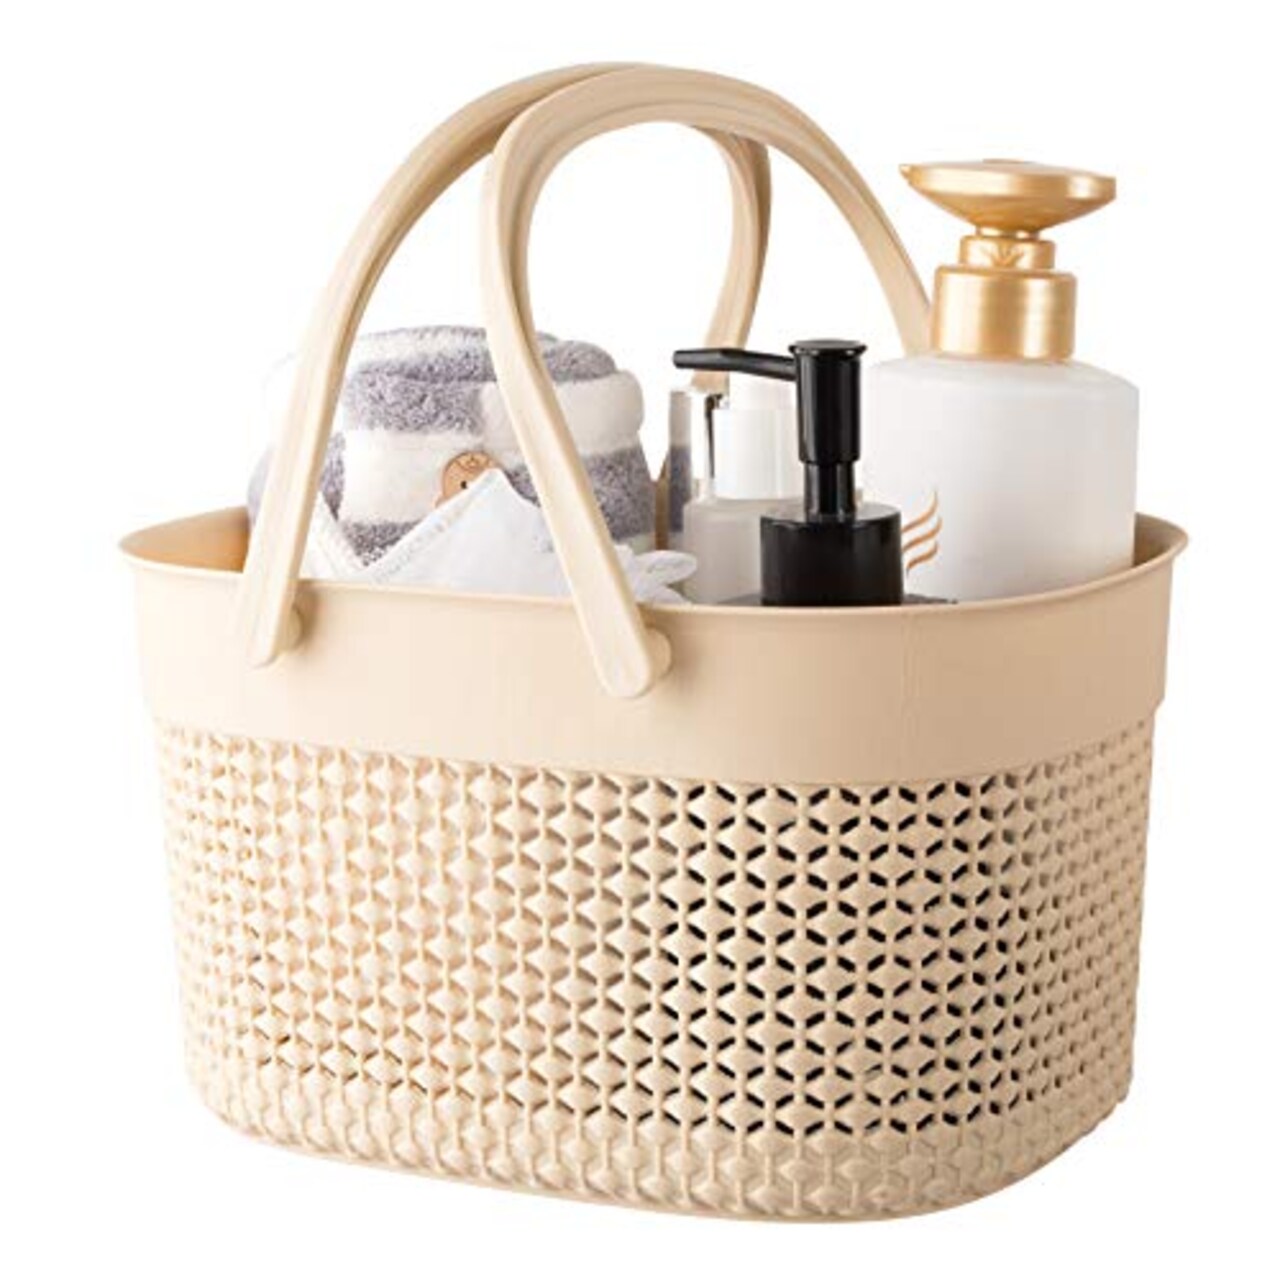 rejomiik Portable Shower Caddy Basket, Plastic Organizer Storage Tote with  Handles Toiletry Bag Bin Box for Bathroom, College Dorm Room Essentials,  Kitchen, Camp, Gym - Khakis